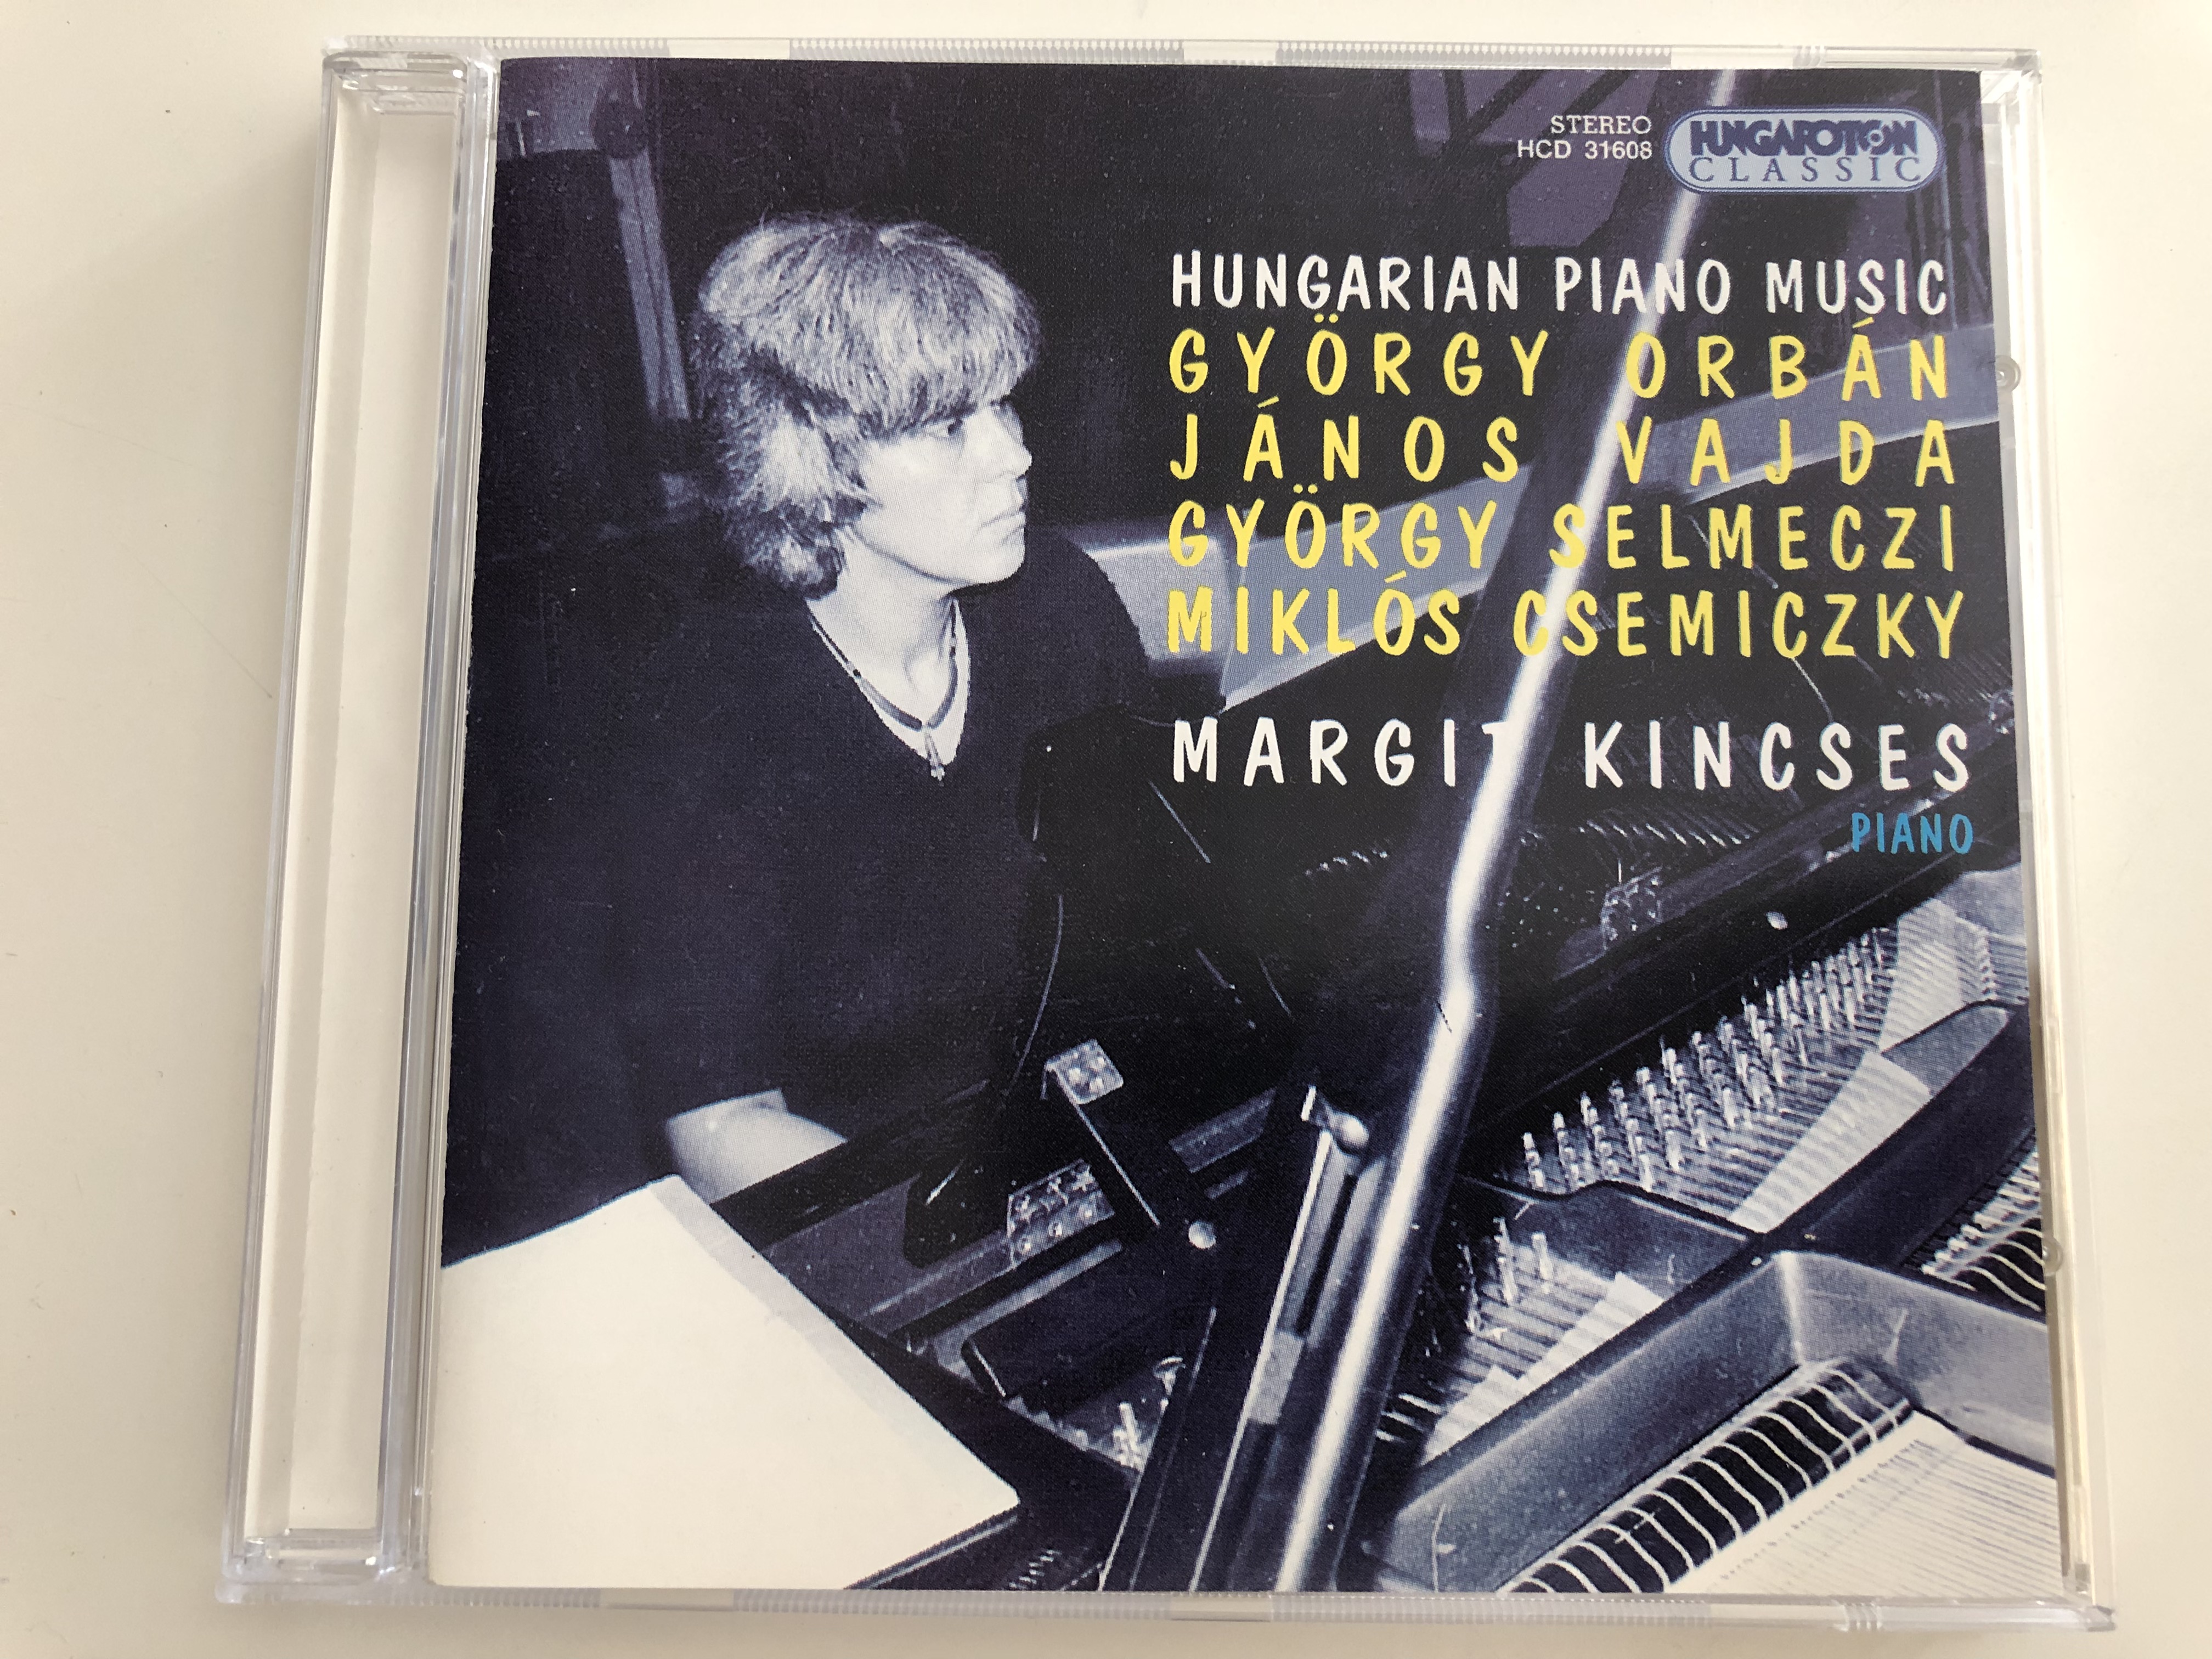 Hungarian Piano Music - György Orbán, János Vajda, György Selmeczi, Miklós  Csemiczky / Margit Kincses piano / Hungaroton Classic Audio CD 1994 / HCD  31608 - bibleinmylanguage